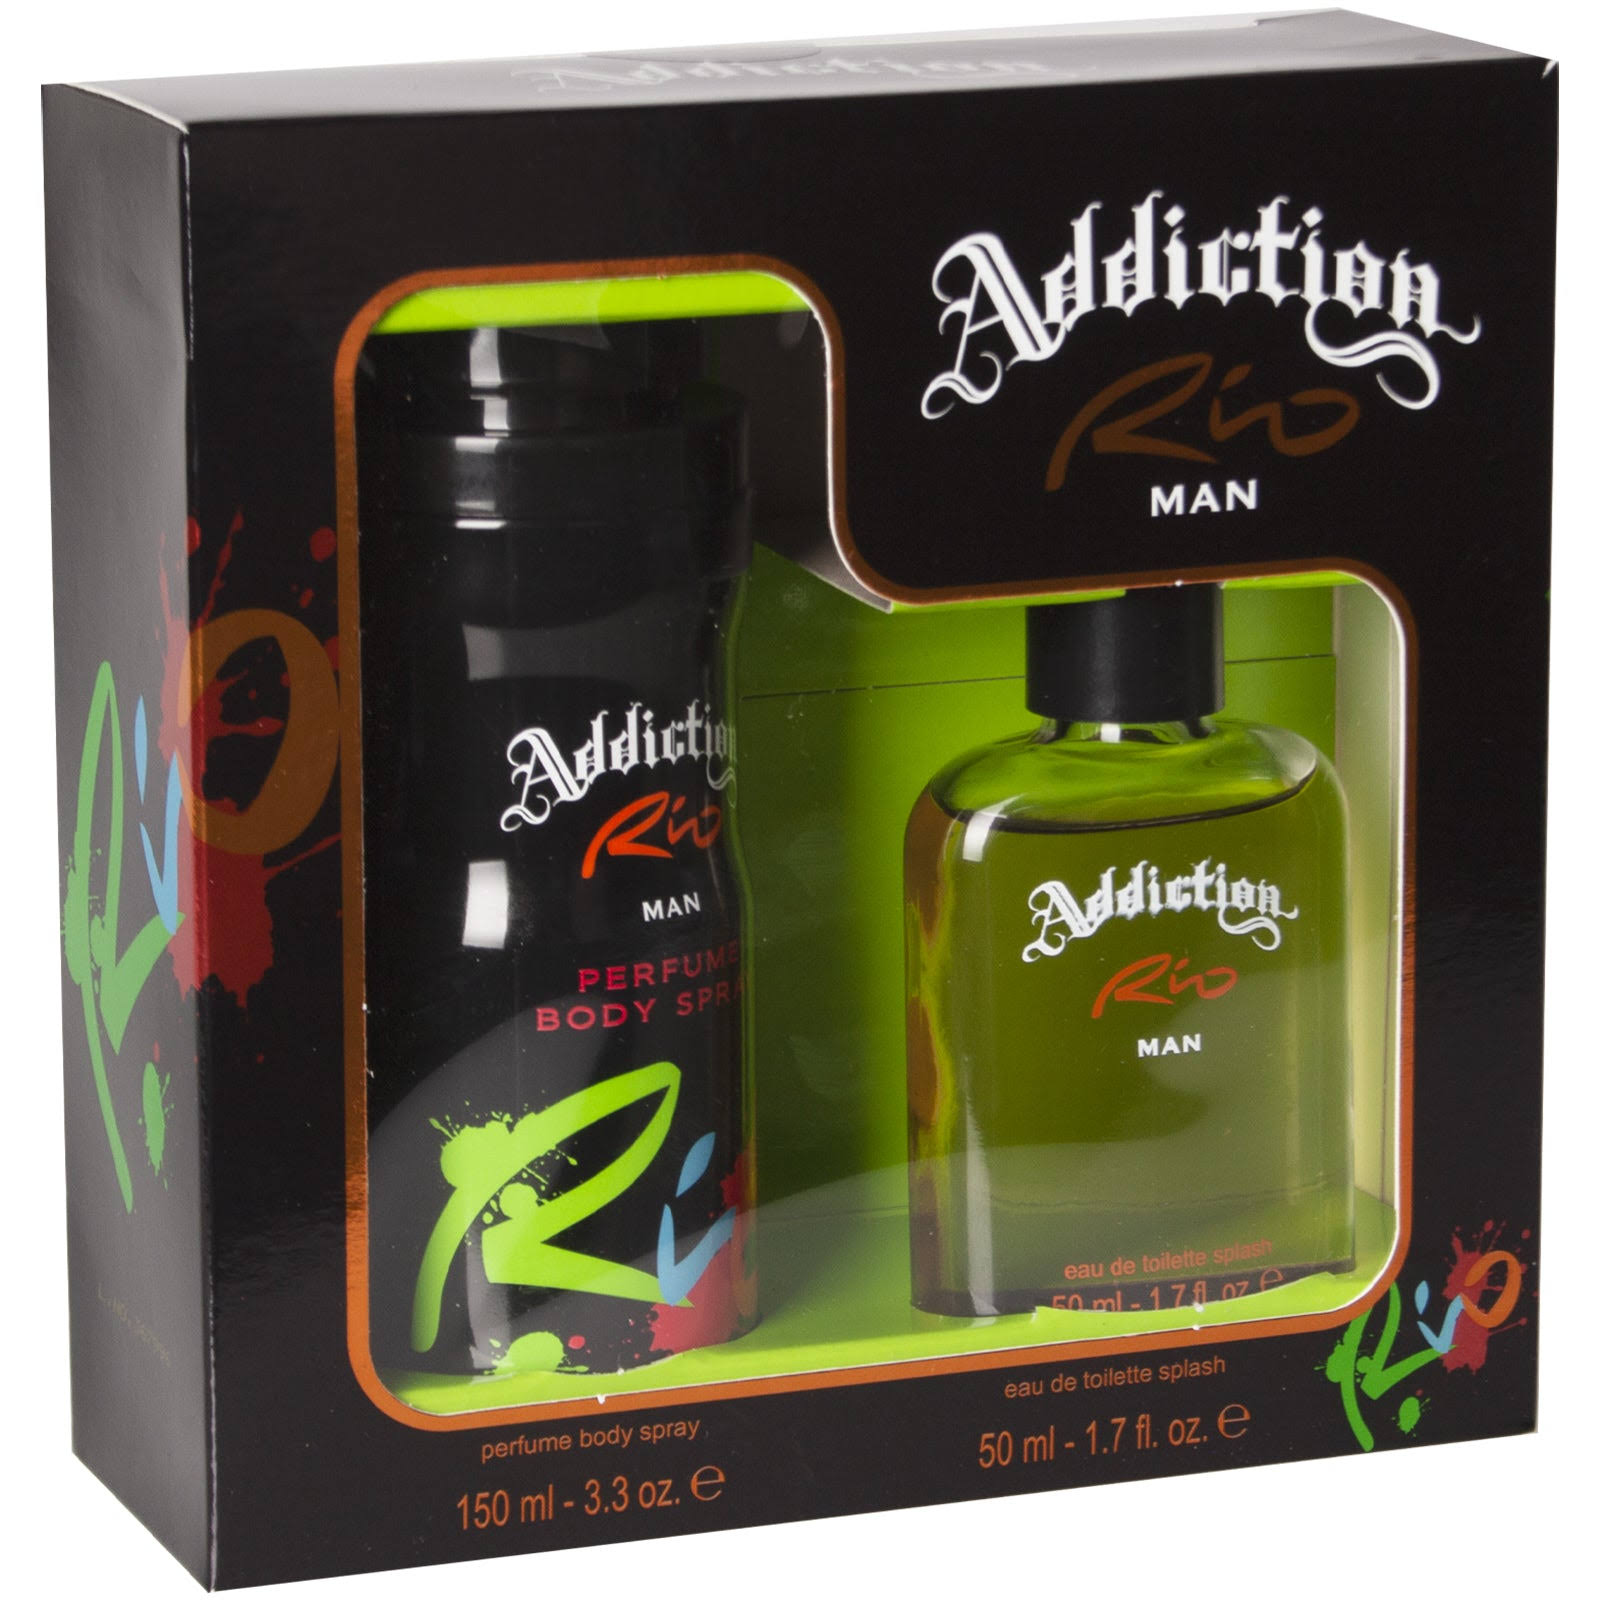 Addiction Rio Man Gift Set Body Spray 150ml & Eau de Toilette 50ml